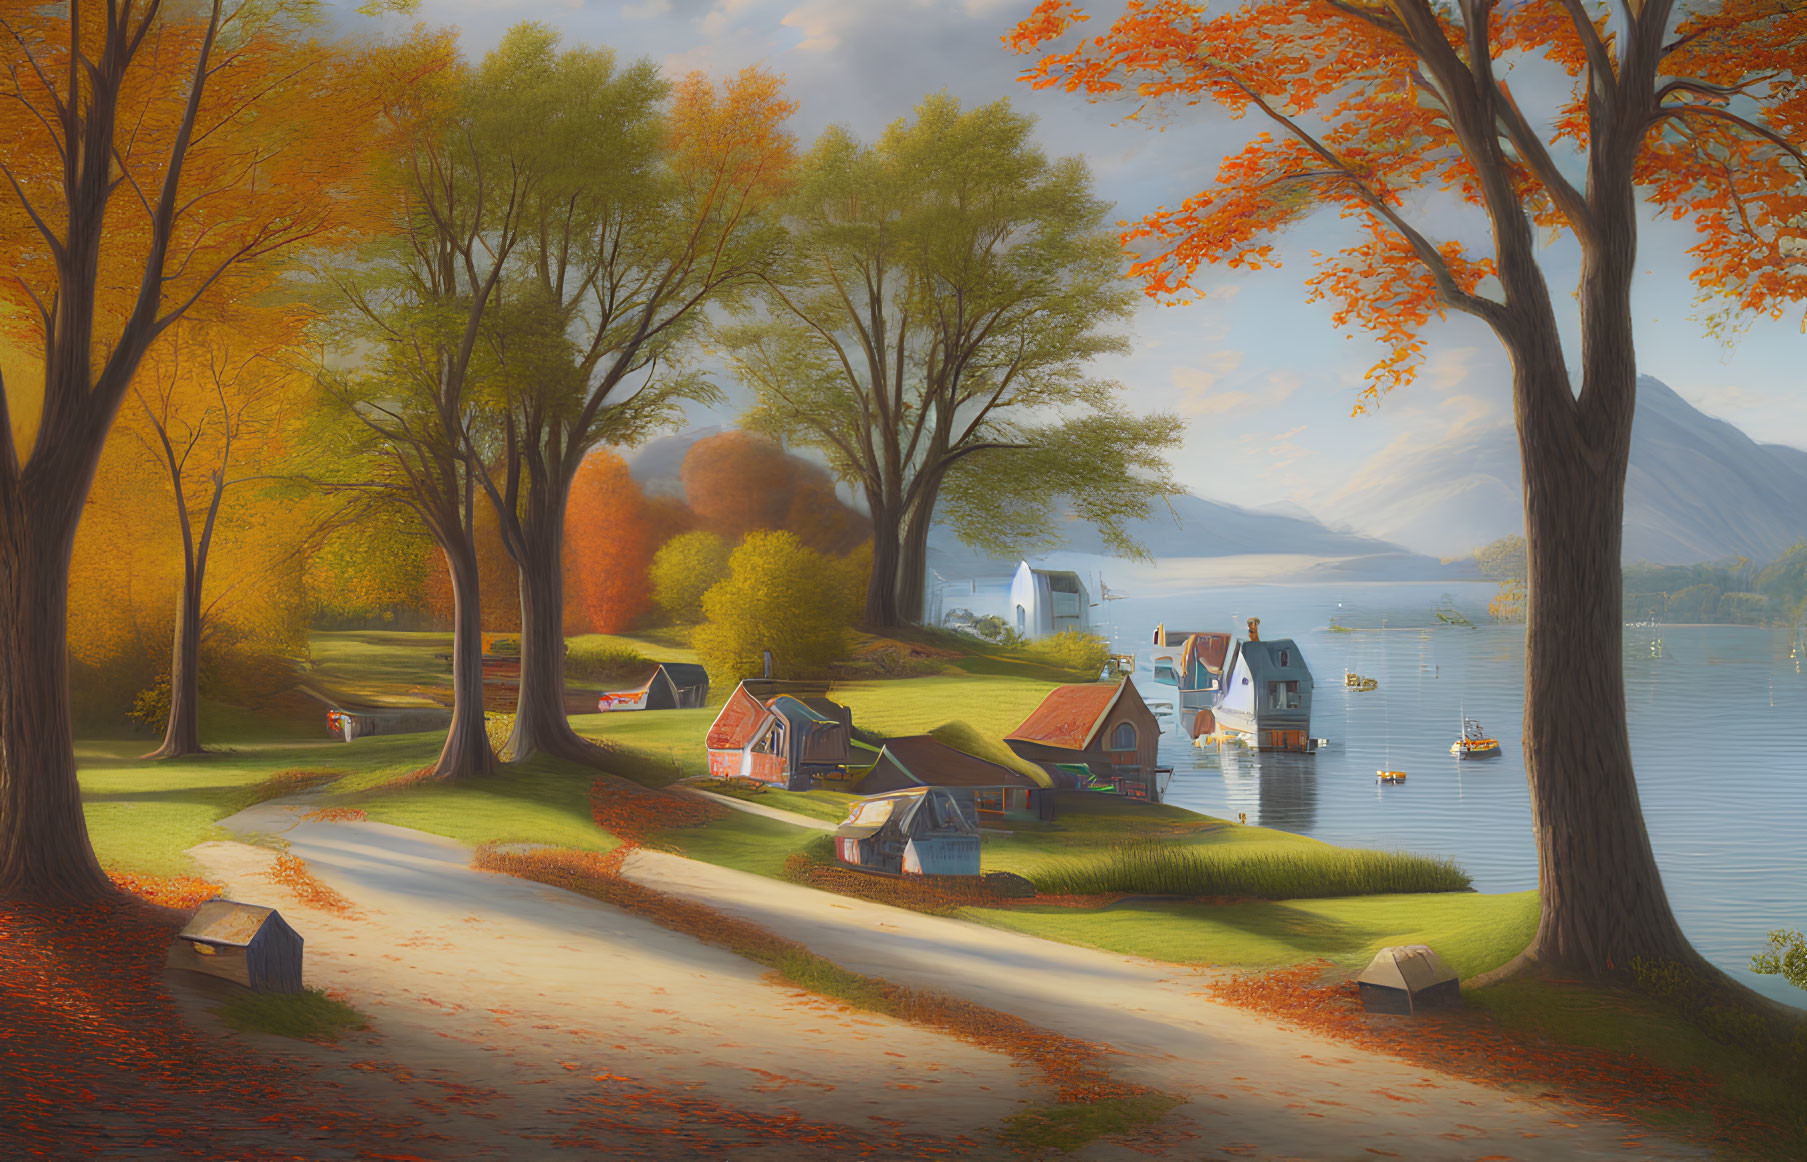 Vibrant autumn landscape with orange trees, winding path, houses, and lake nestled among mountains